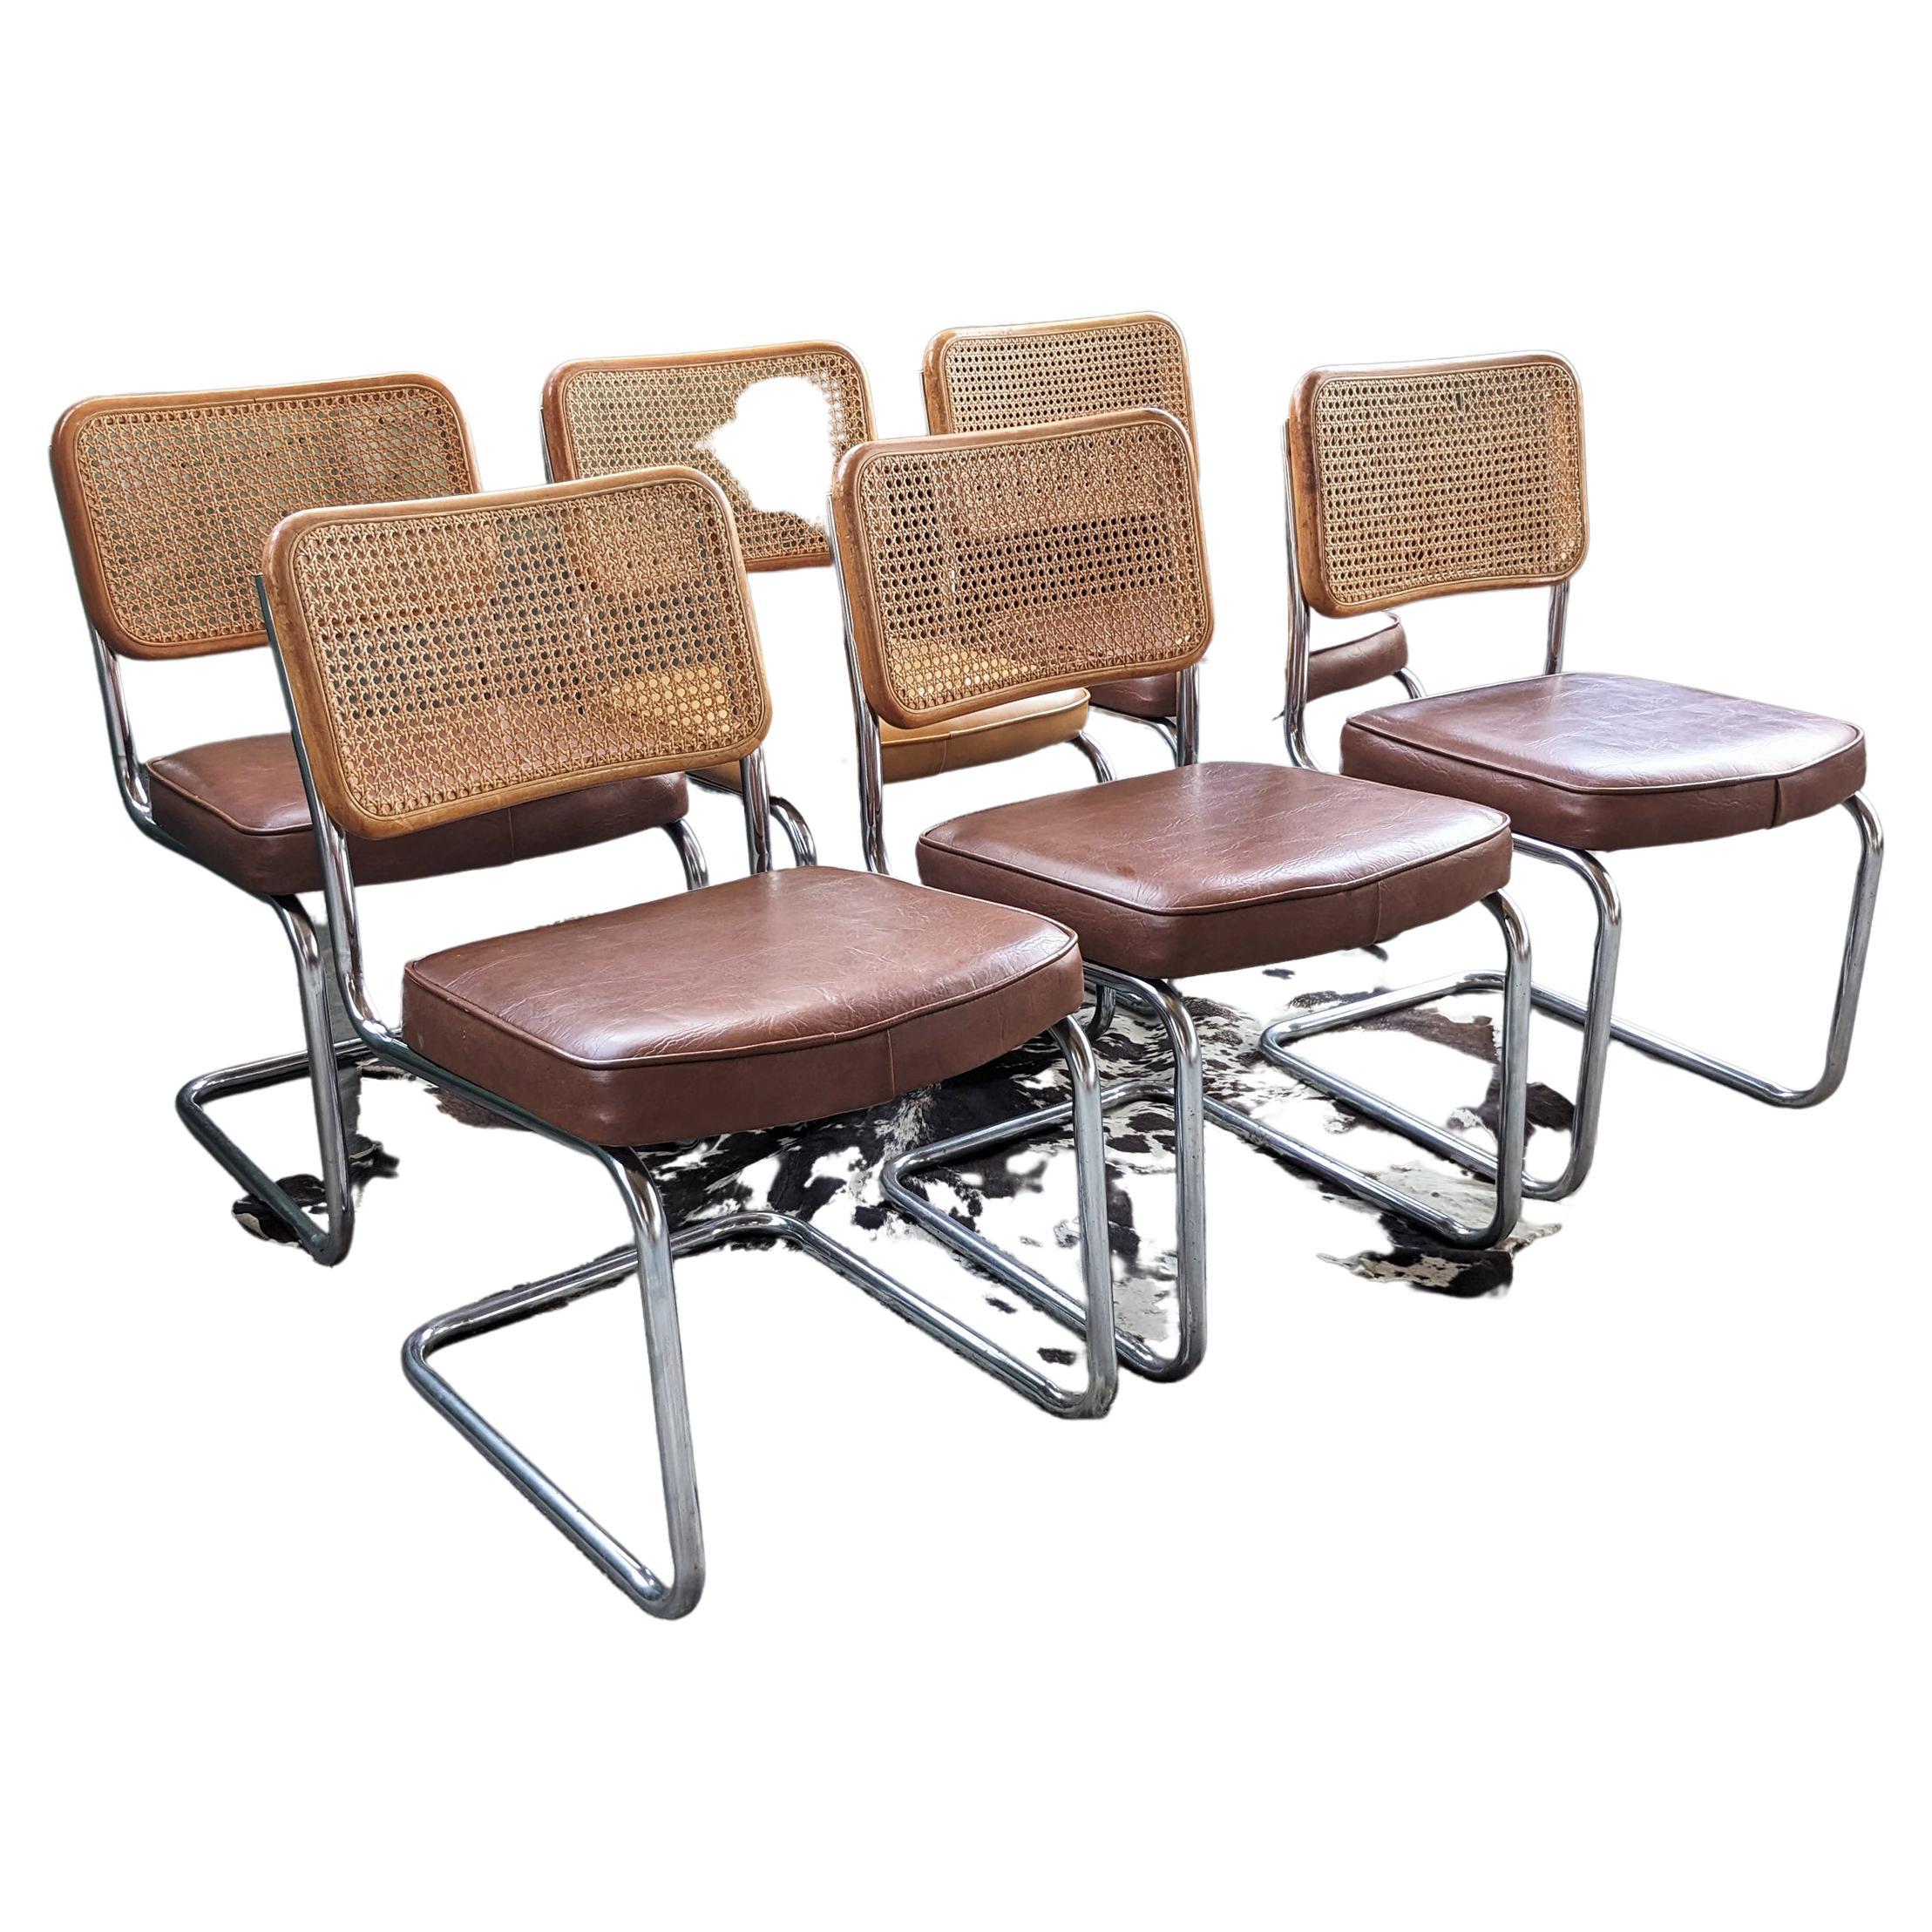 Italian Marcel Breuer Cesca Chairs - Set of 6